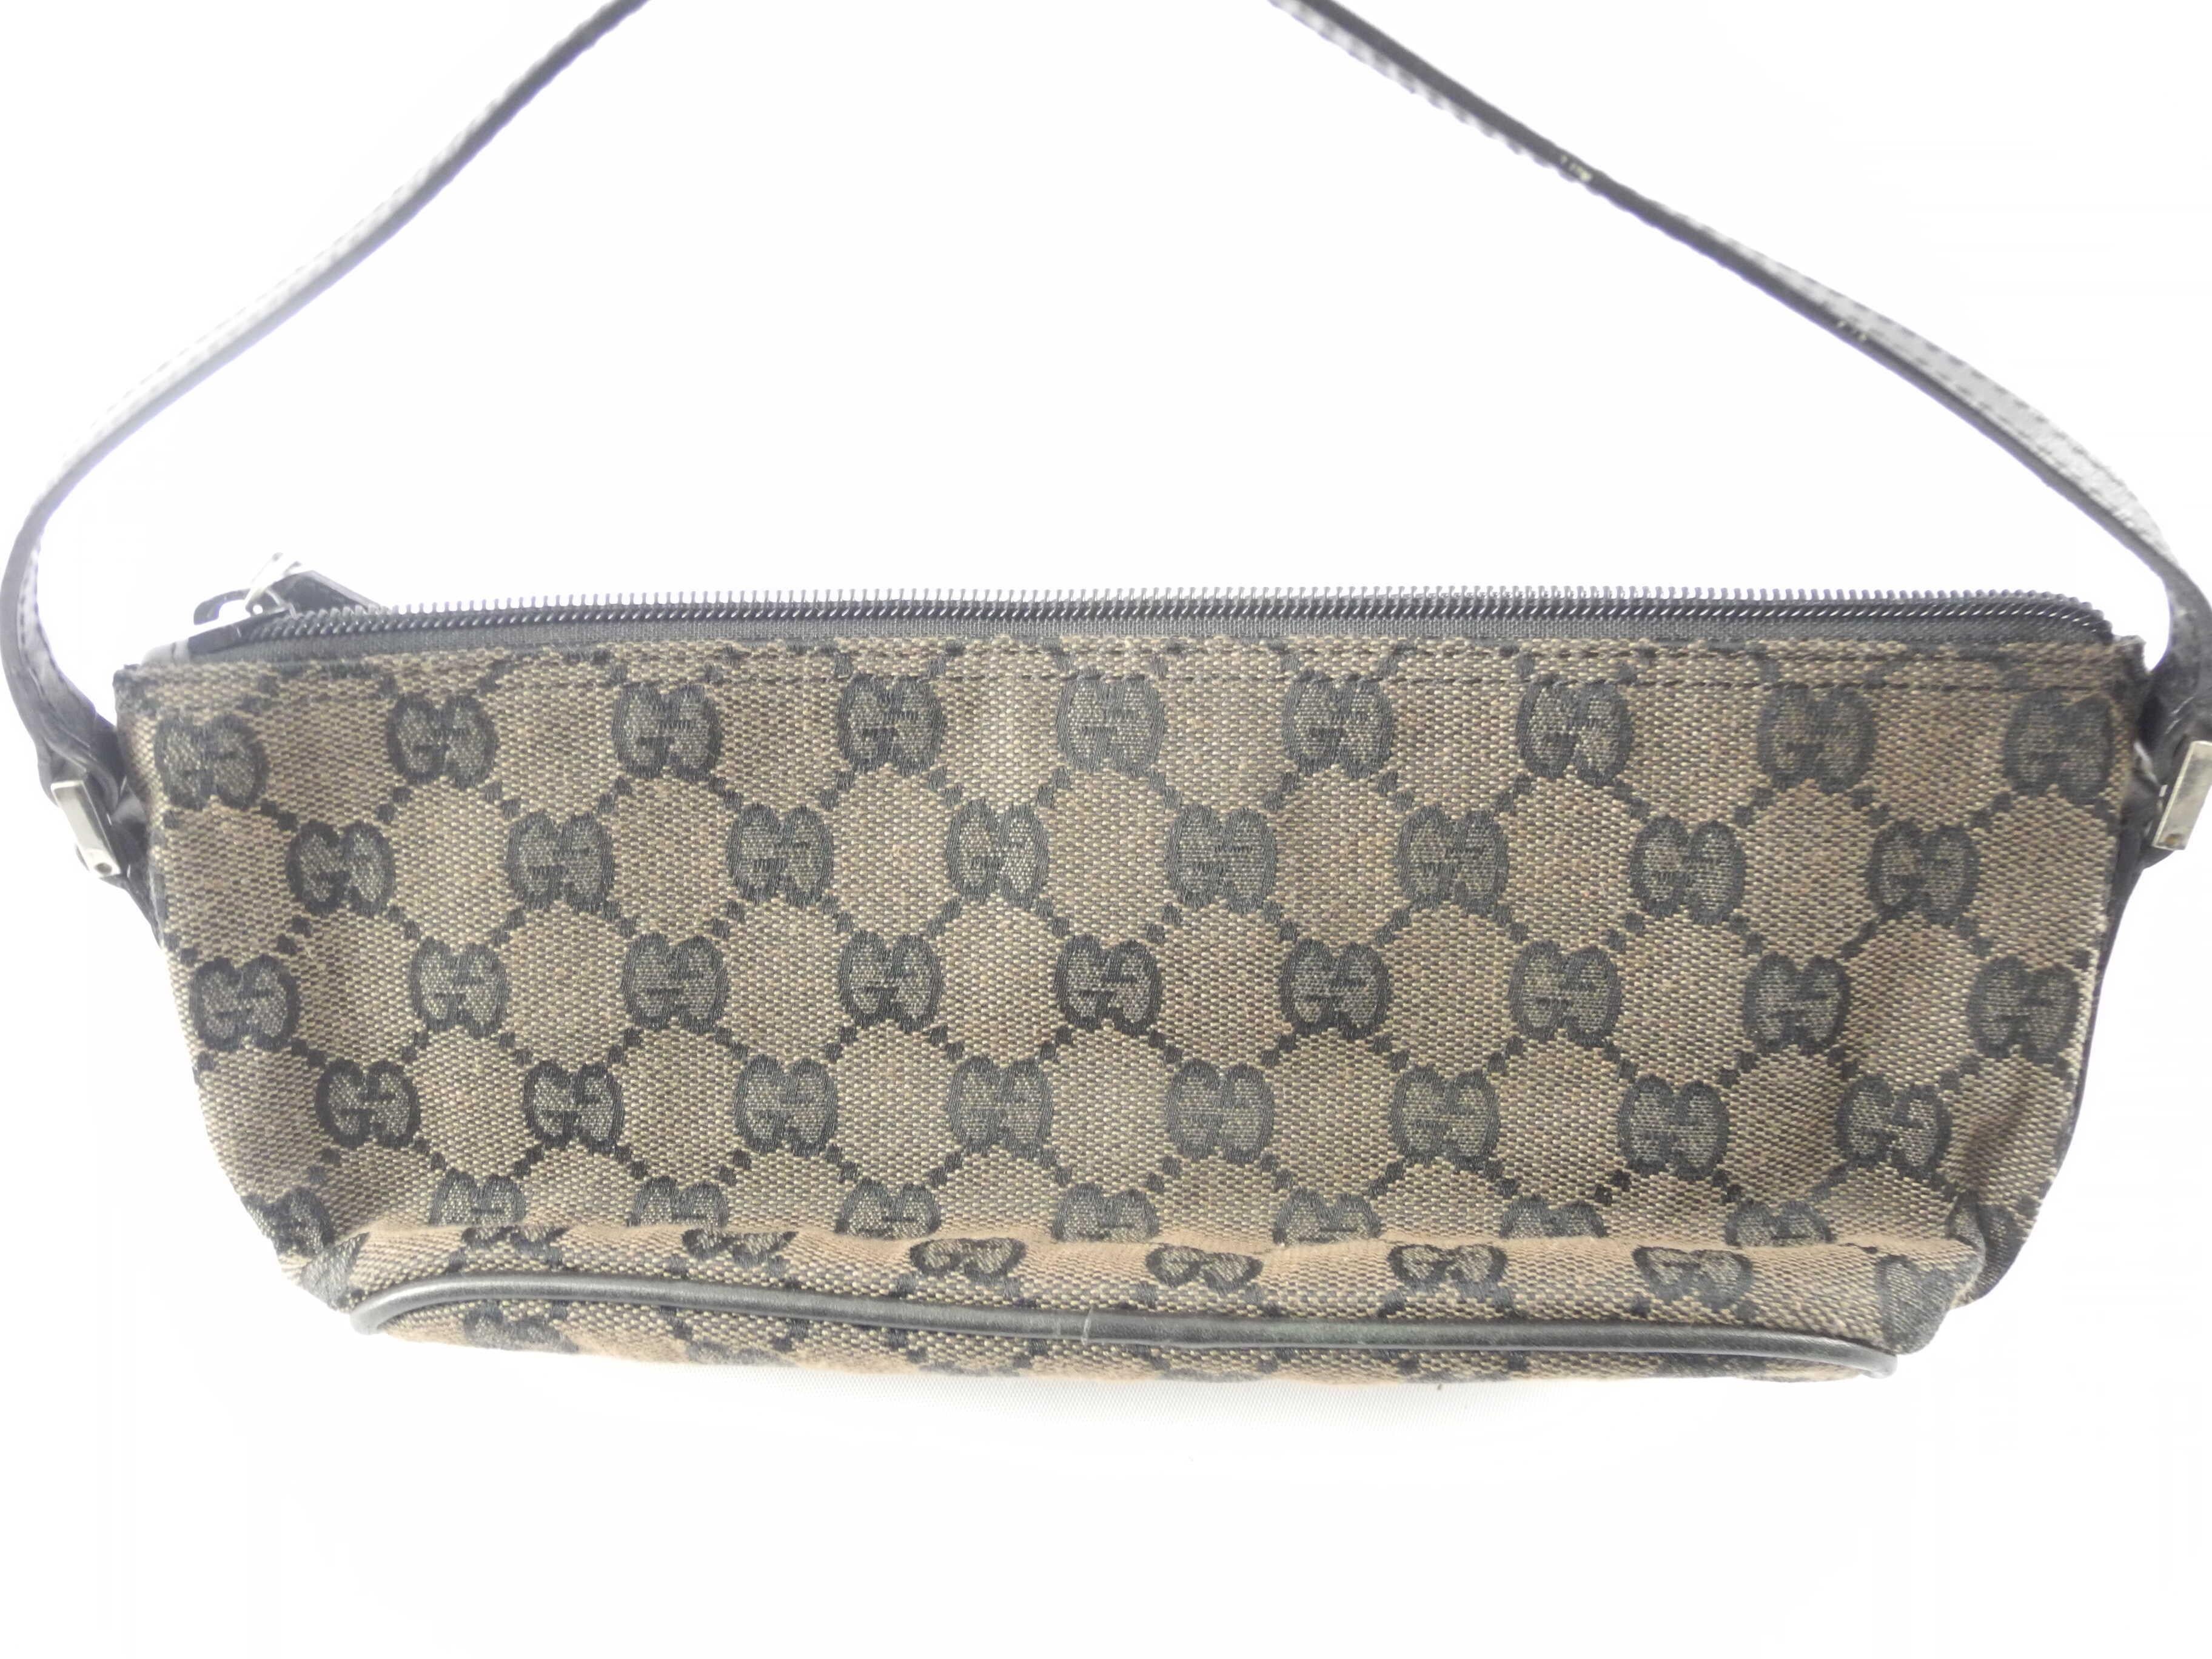 Gucci Baguette Bag - 2 For Sale on 1stDibs